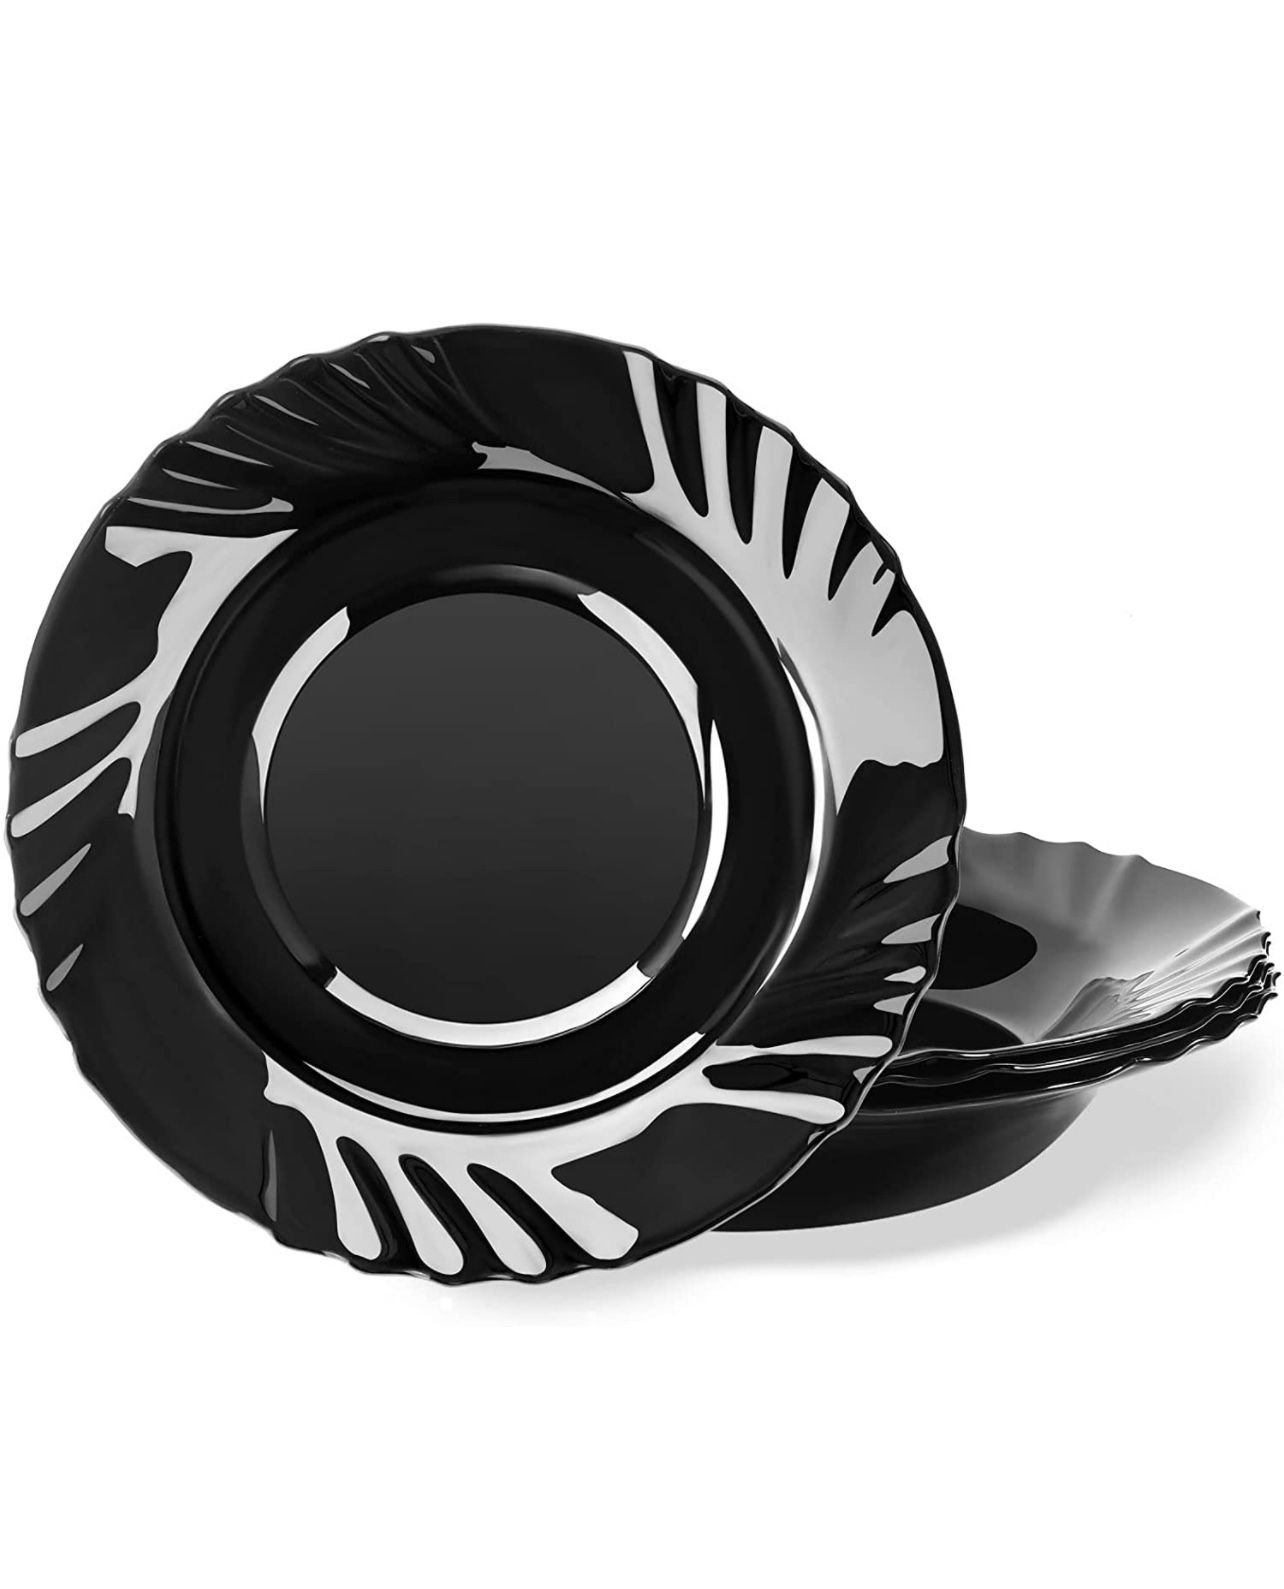 Flared Black Glass Rim Pasta Bowl Set of 4, 8.85-inch